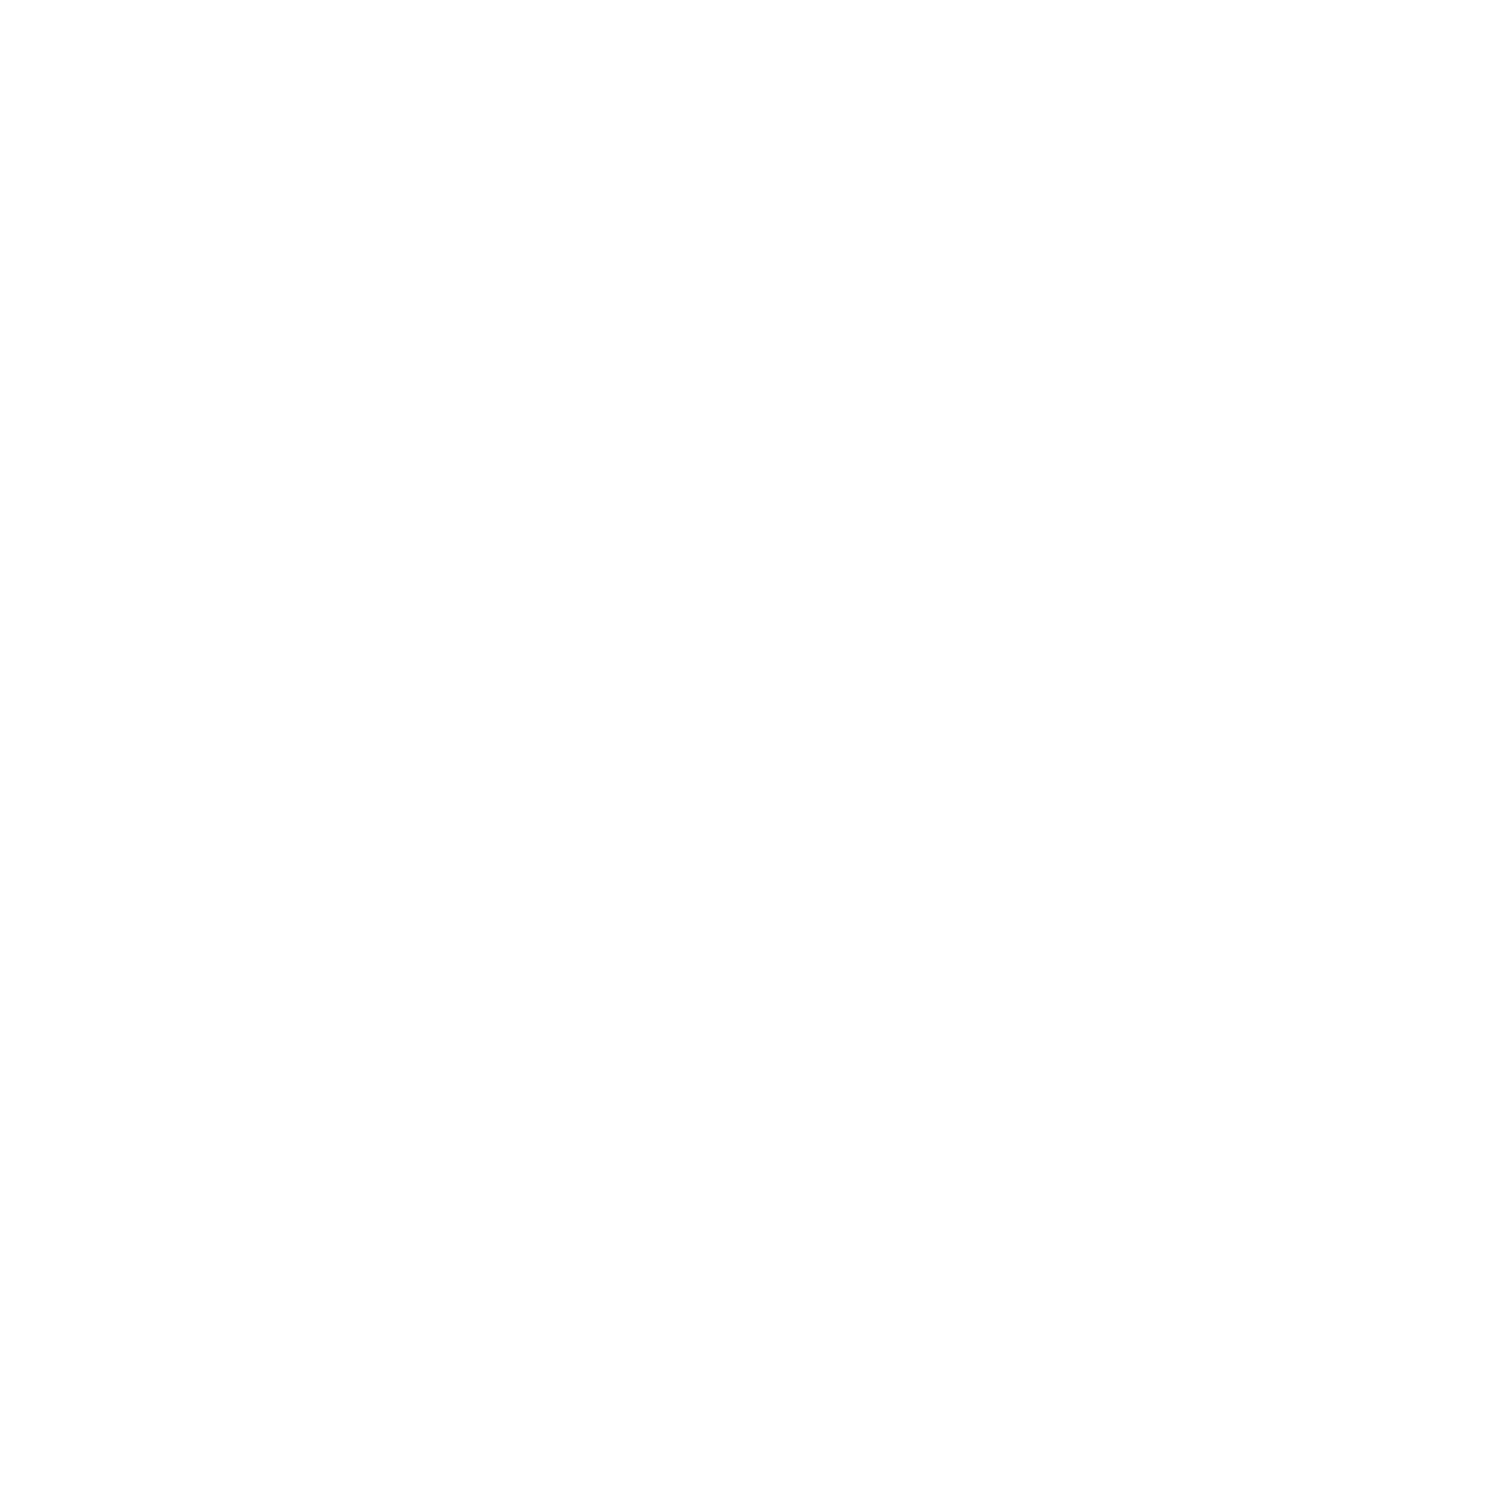 Pine Junction